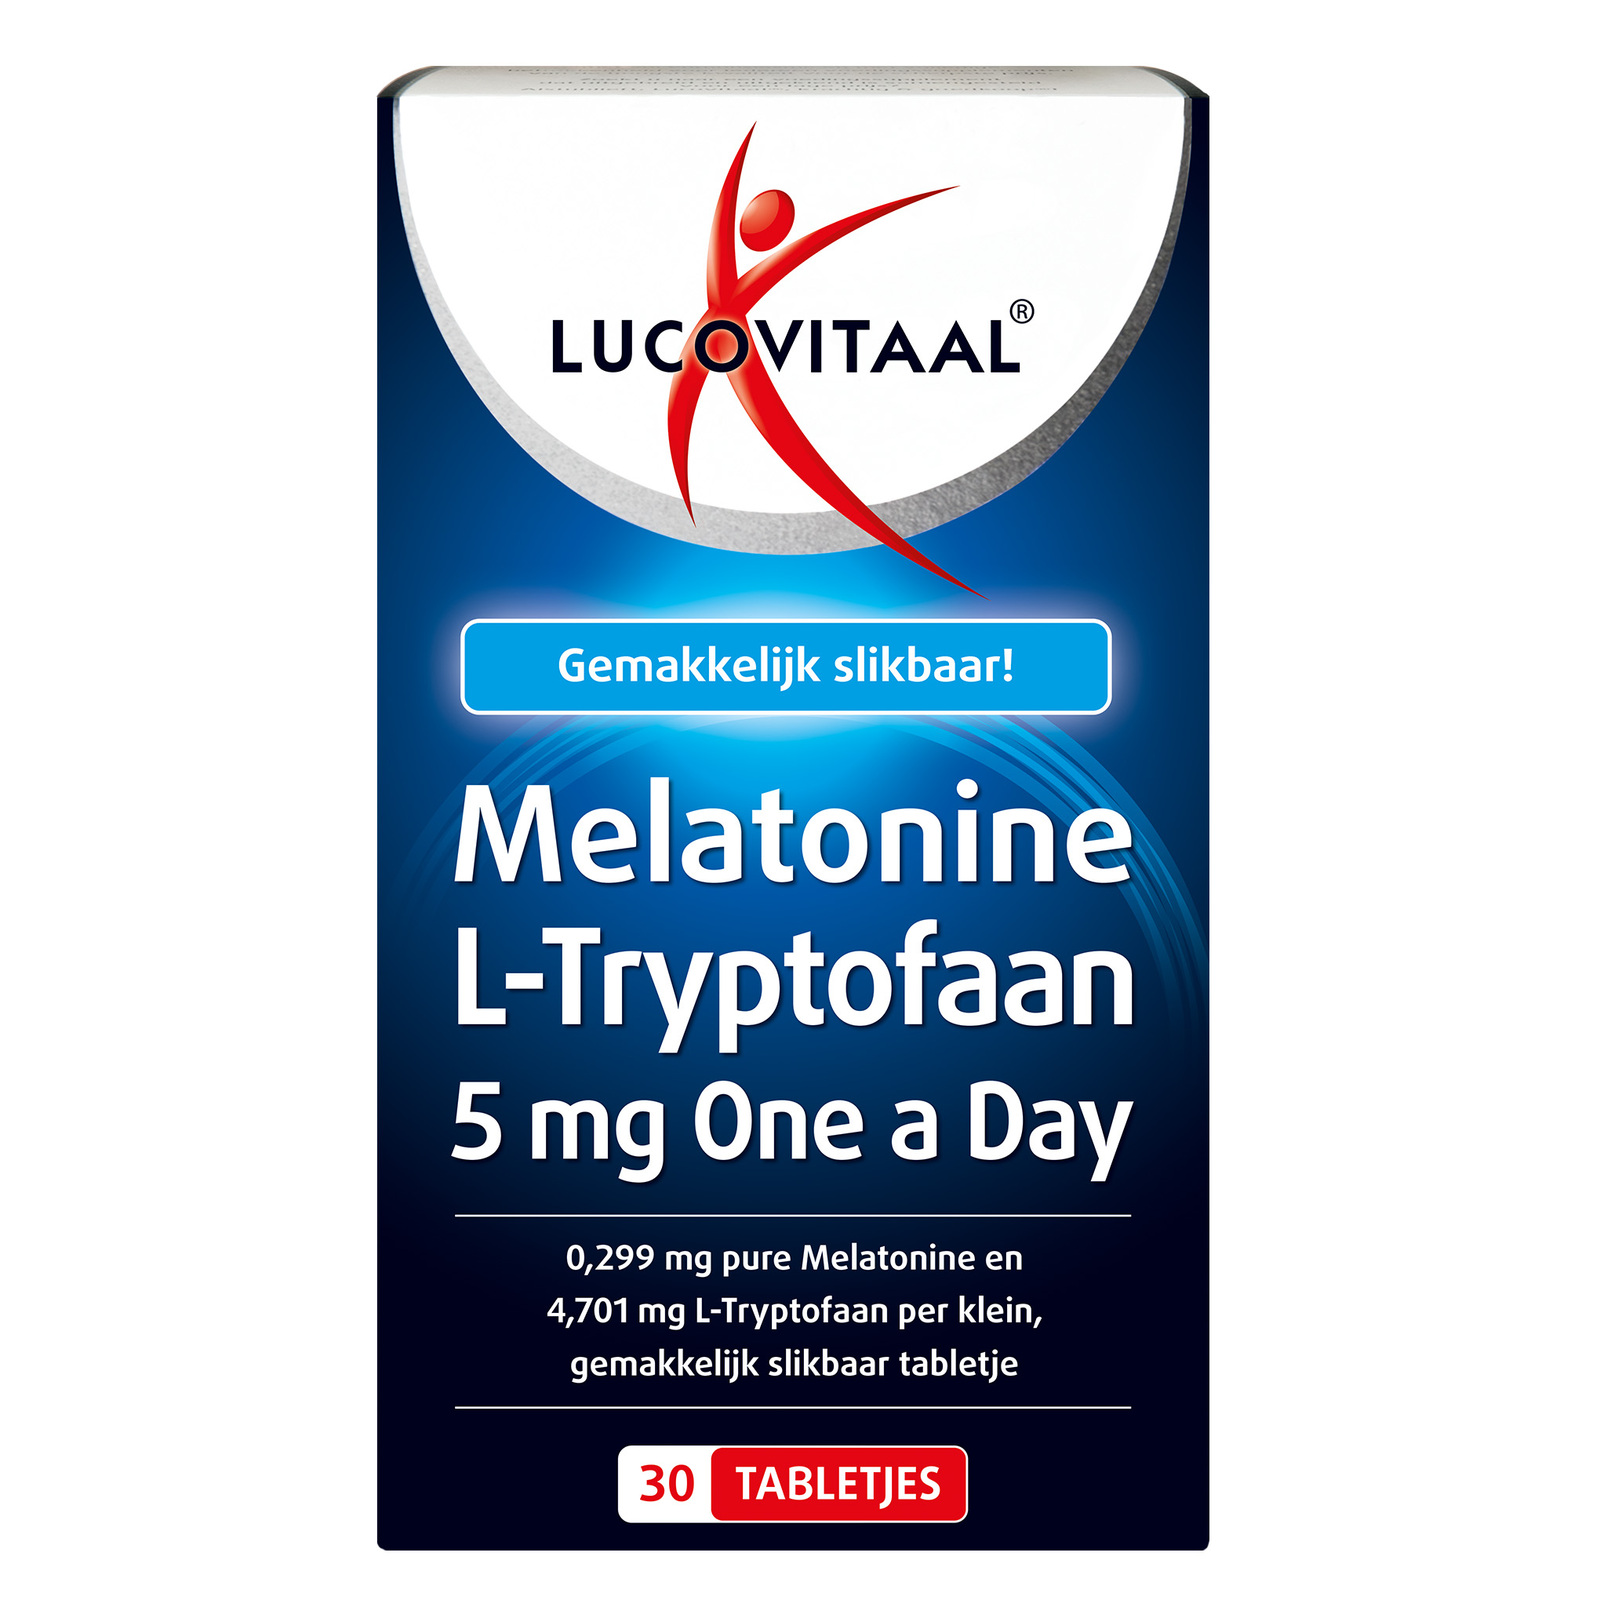 Lucovitaal Melatonine L-Tryptofaan 5mg Tabletten